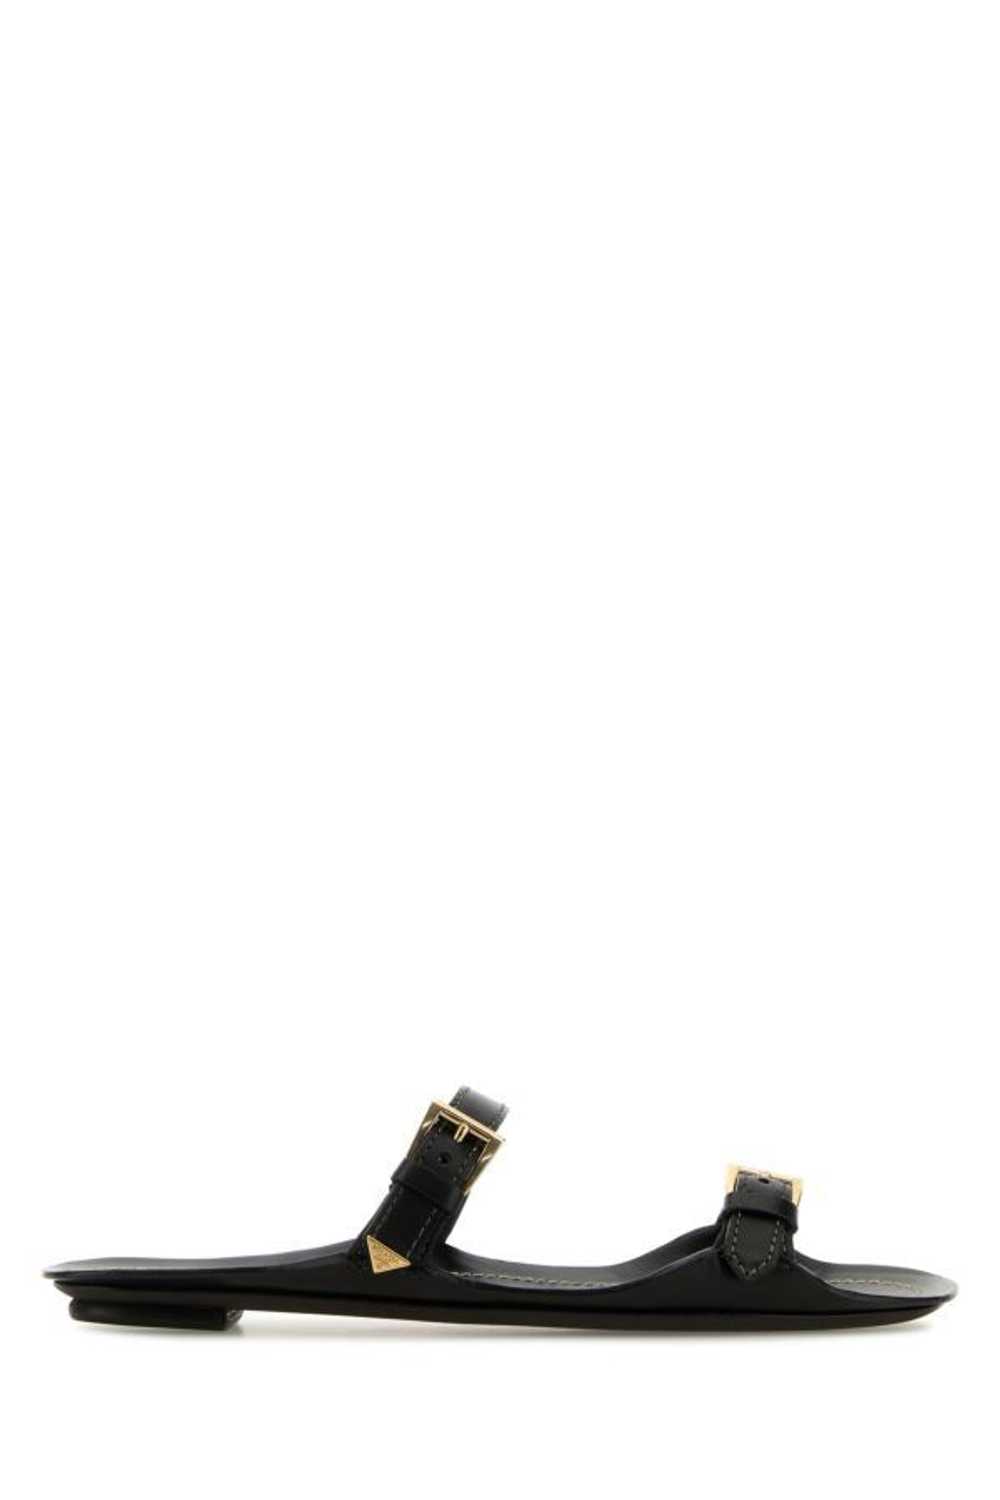 Prada Black Leather Slippers - image 3